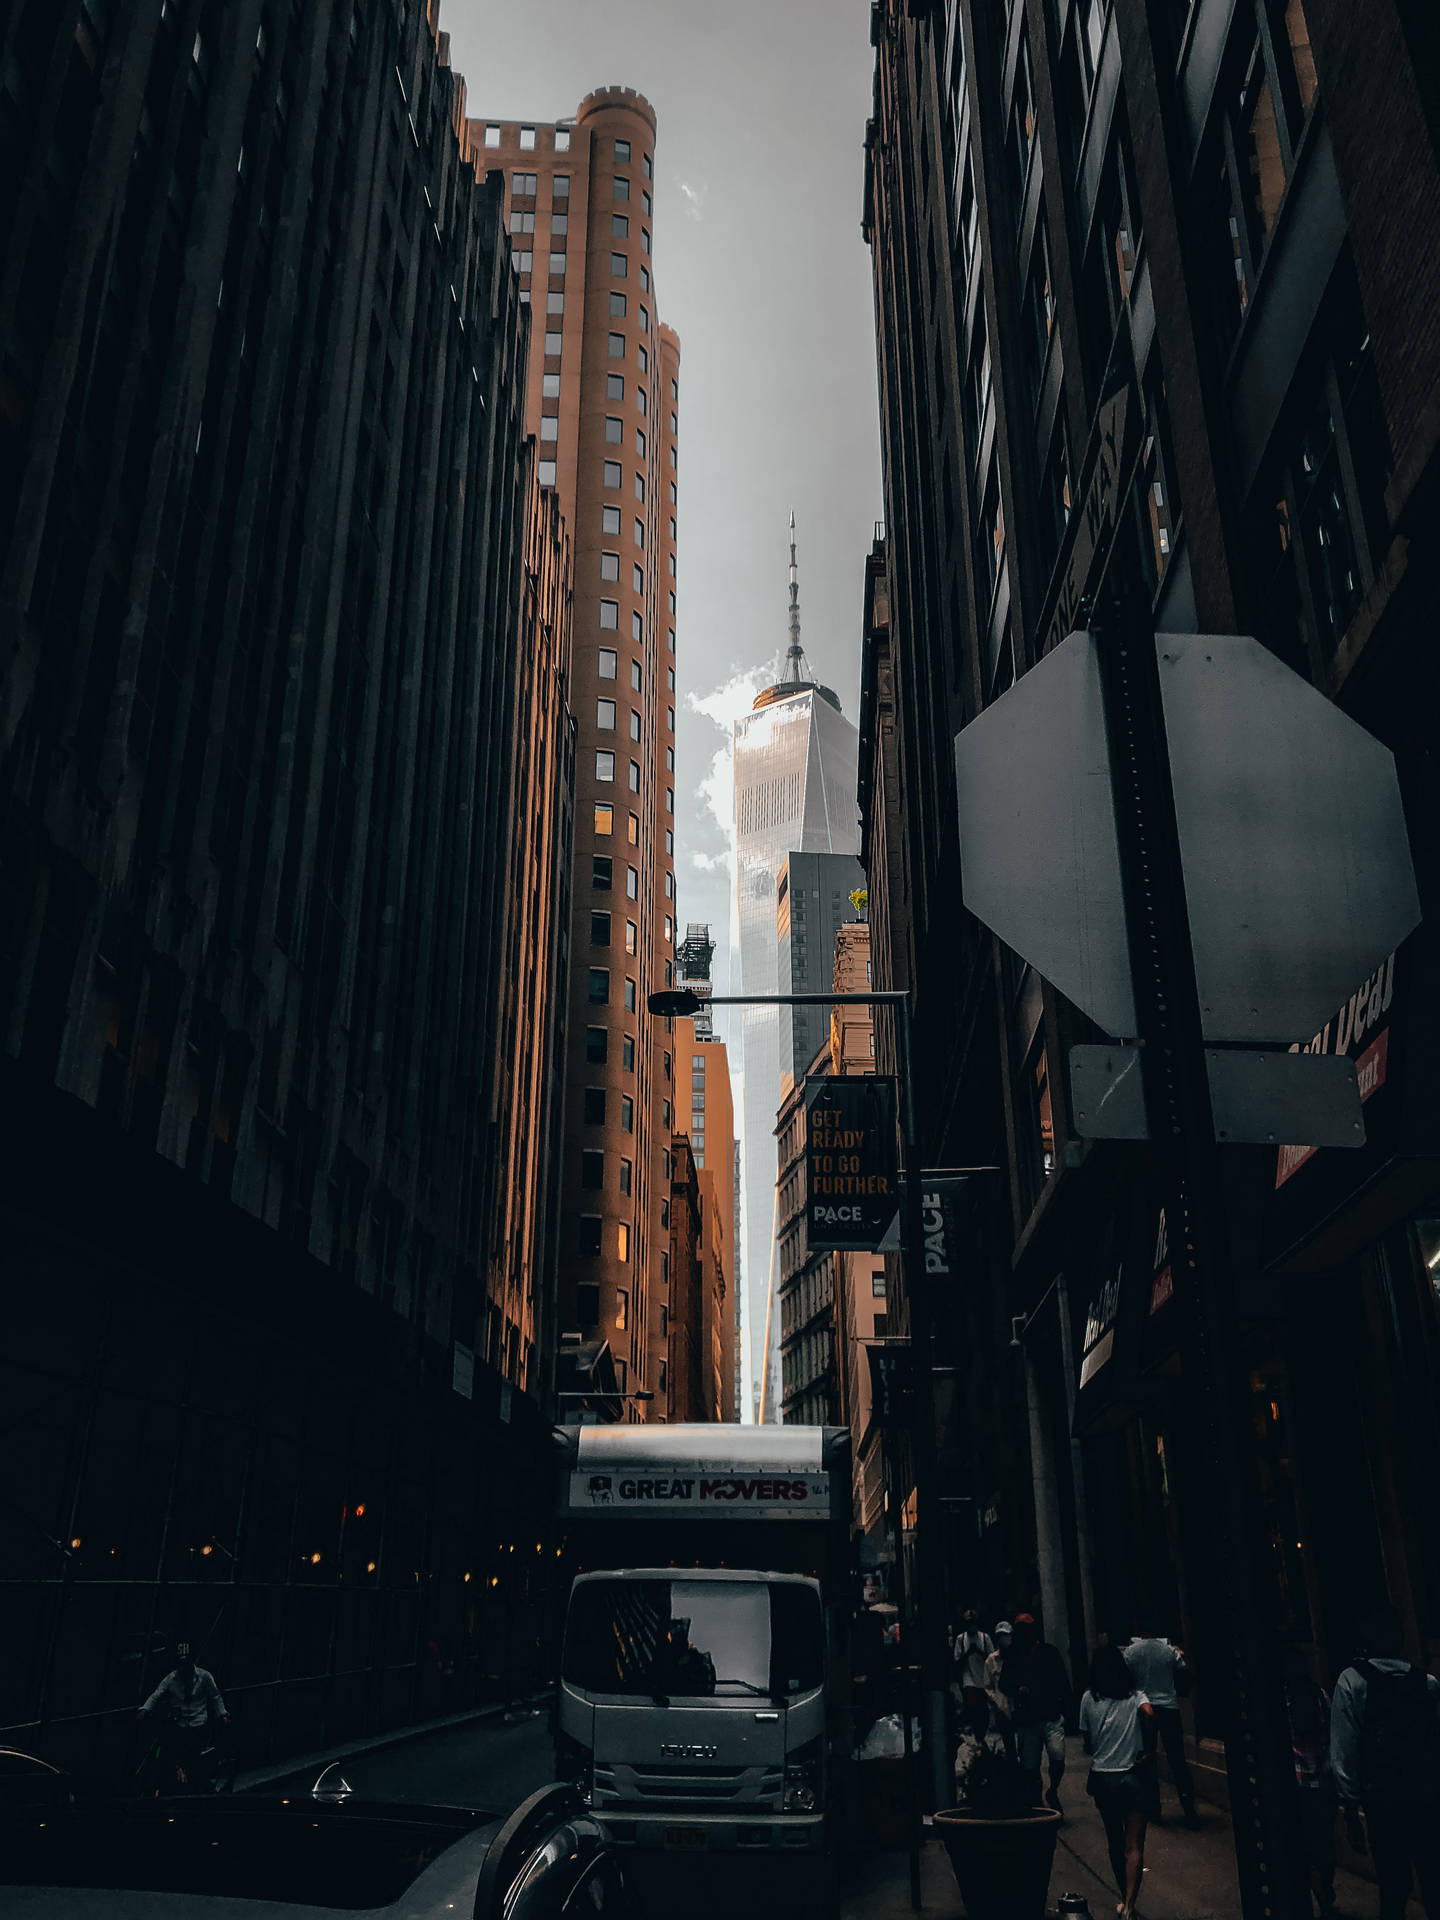 Alley Between Buildings In New York Iphone Background